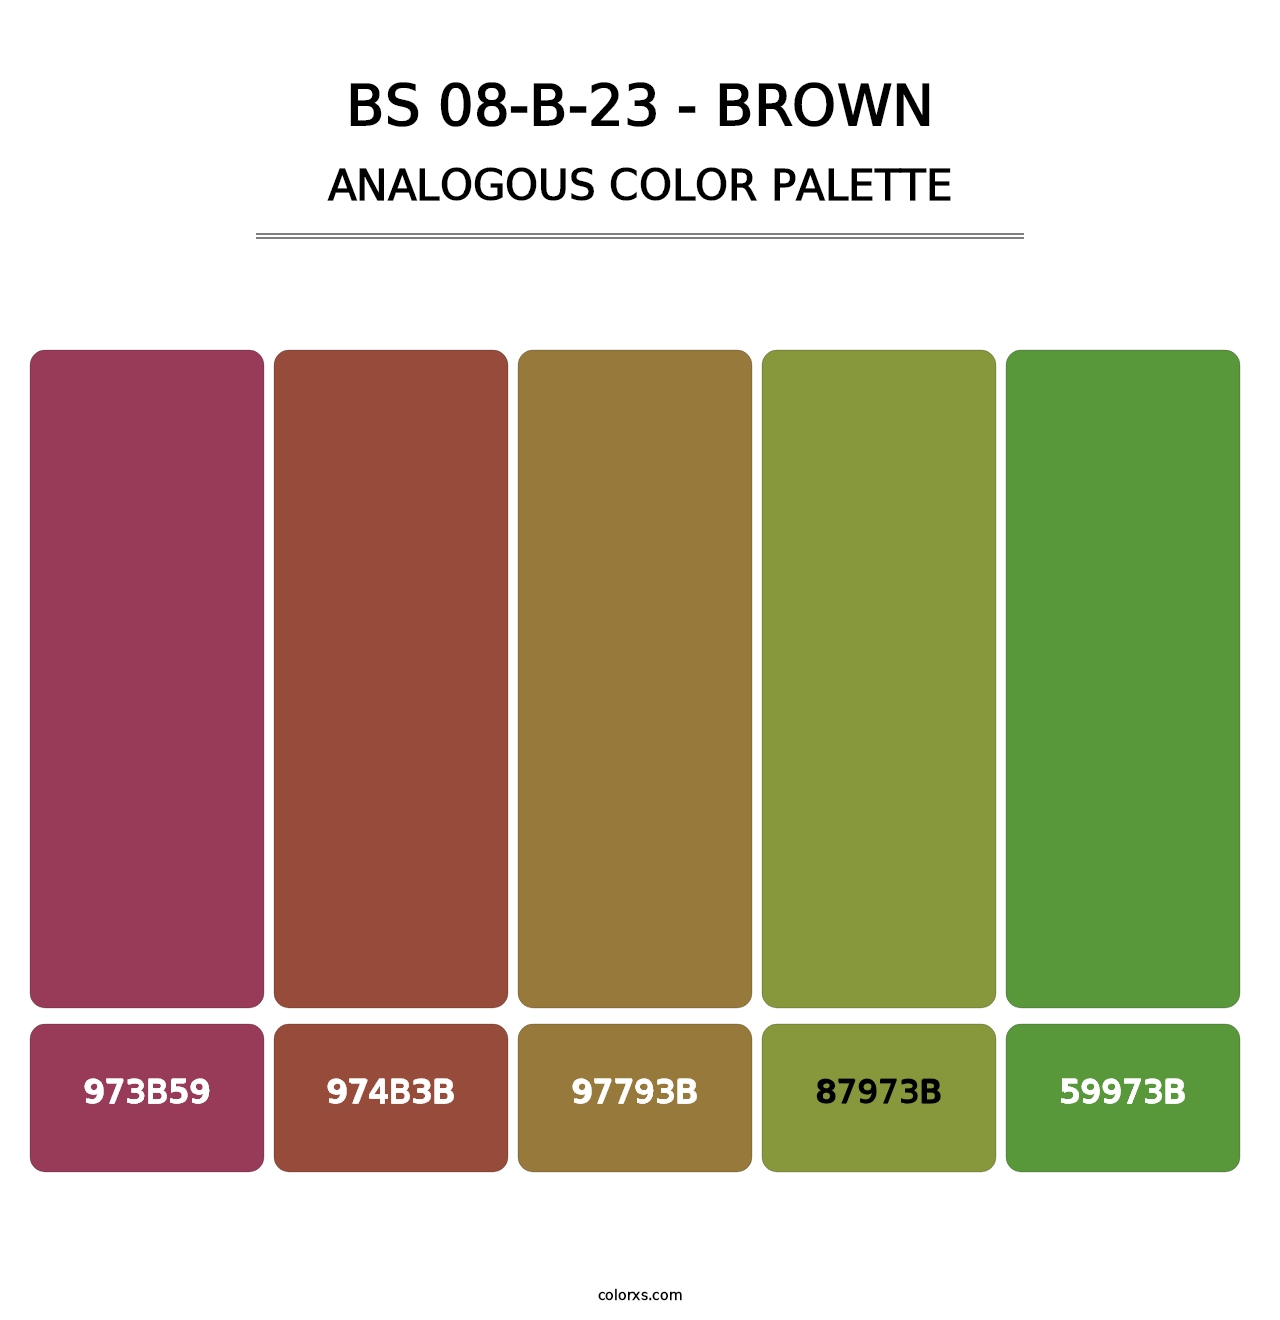 BS 08-B-23 - Brown - Analogous Color Palette